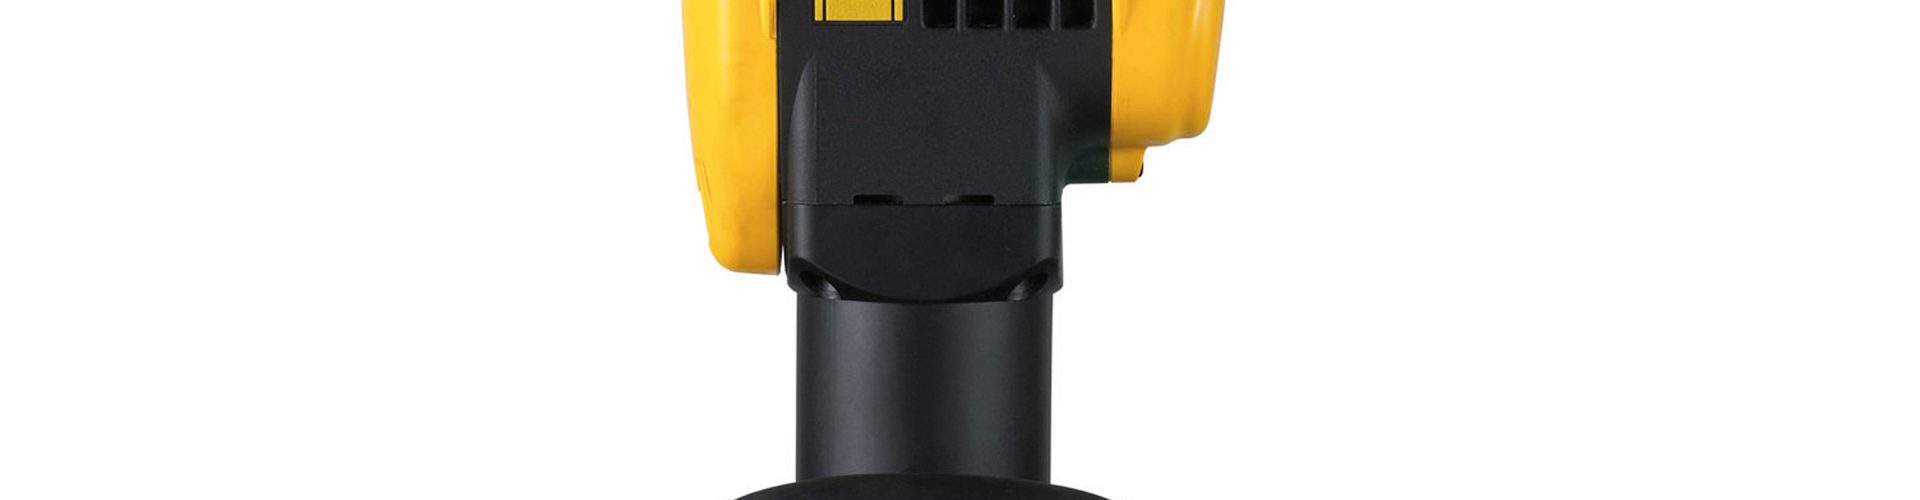 DeWalt SDS max Breaker Hammer (D25899K-QS)